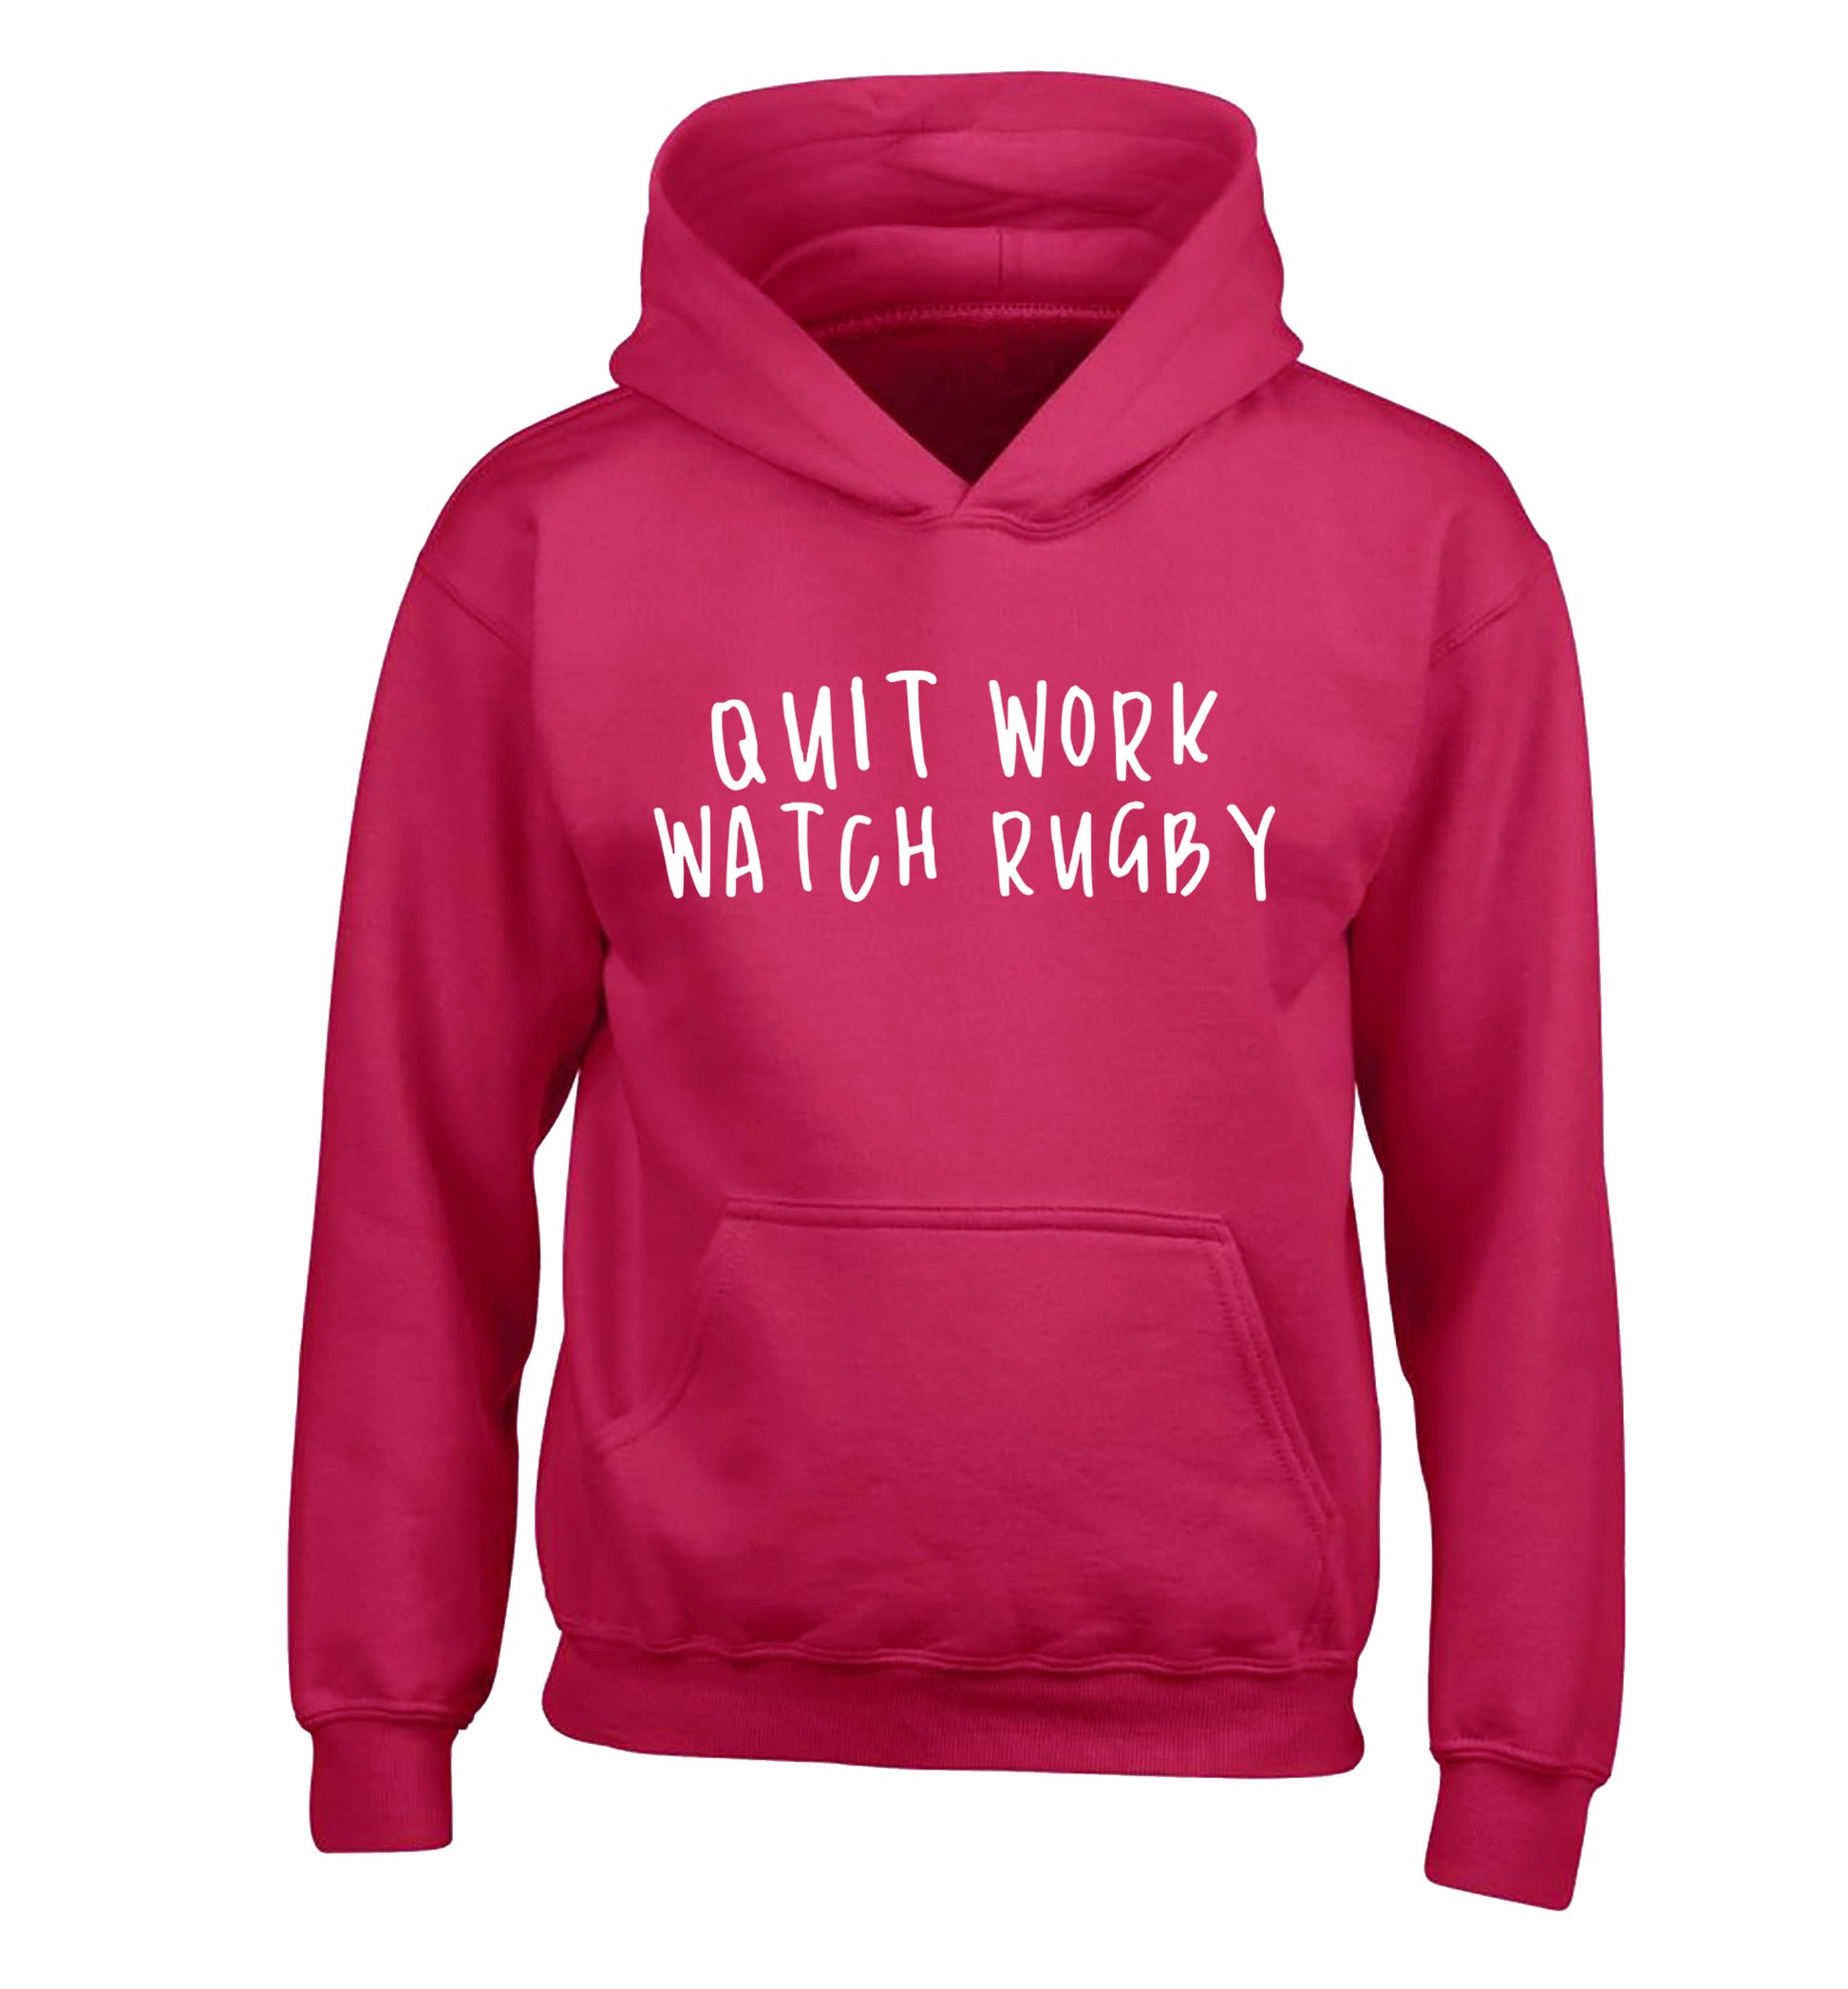 Quit work watch rugby children's pink hoodie 12-13 Years